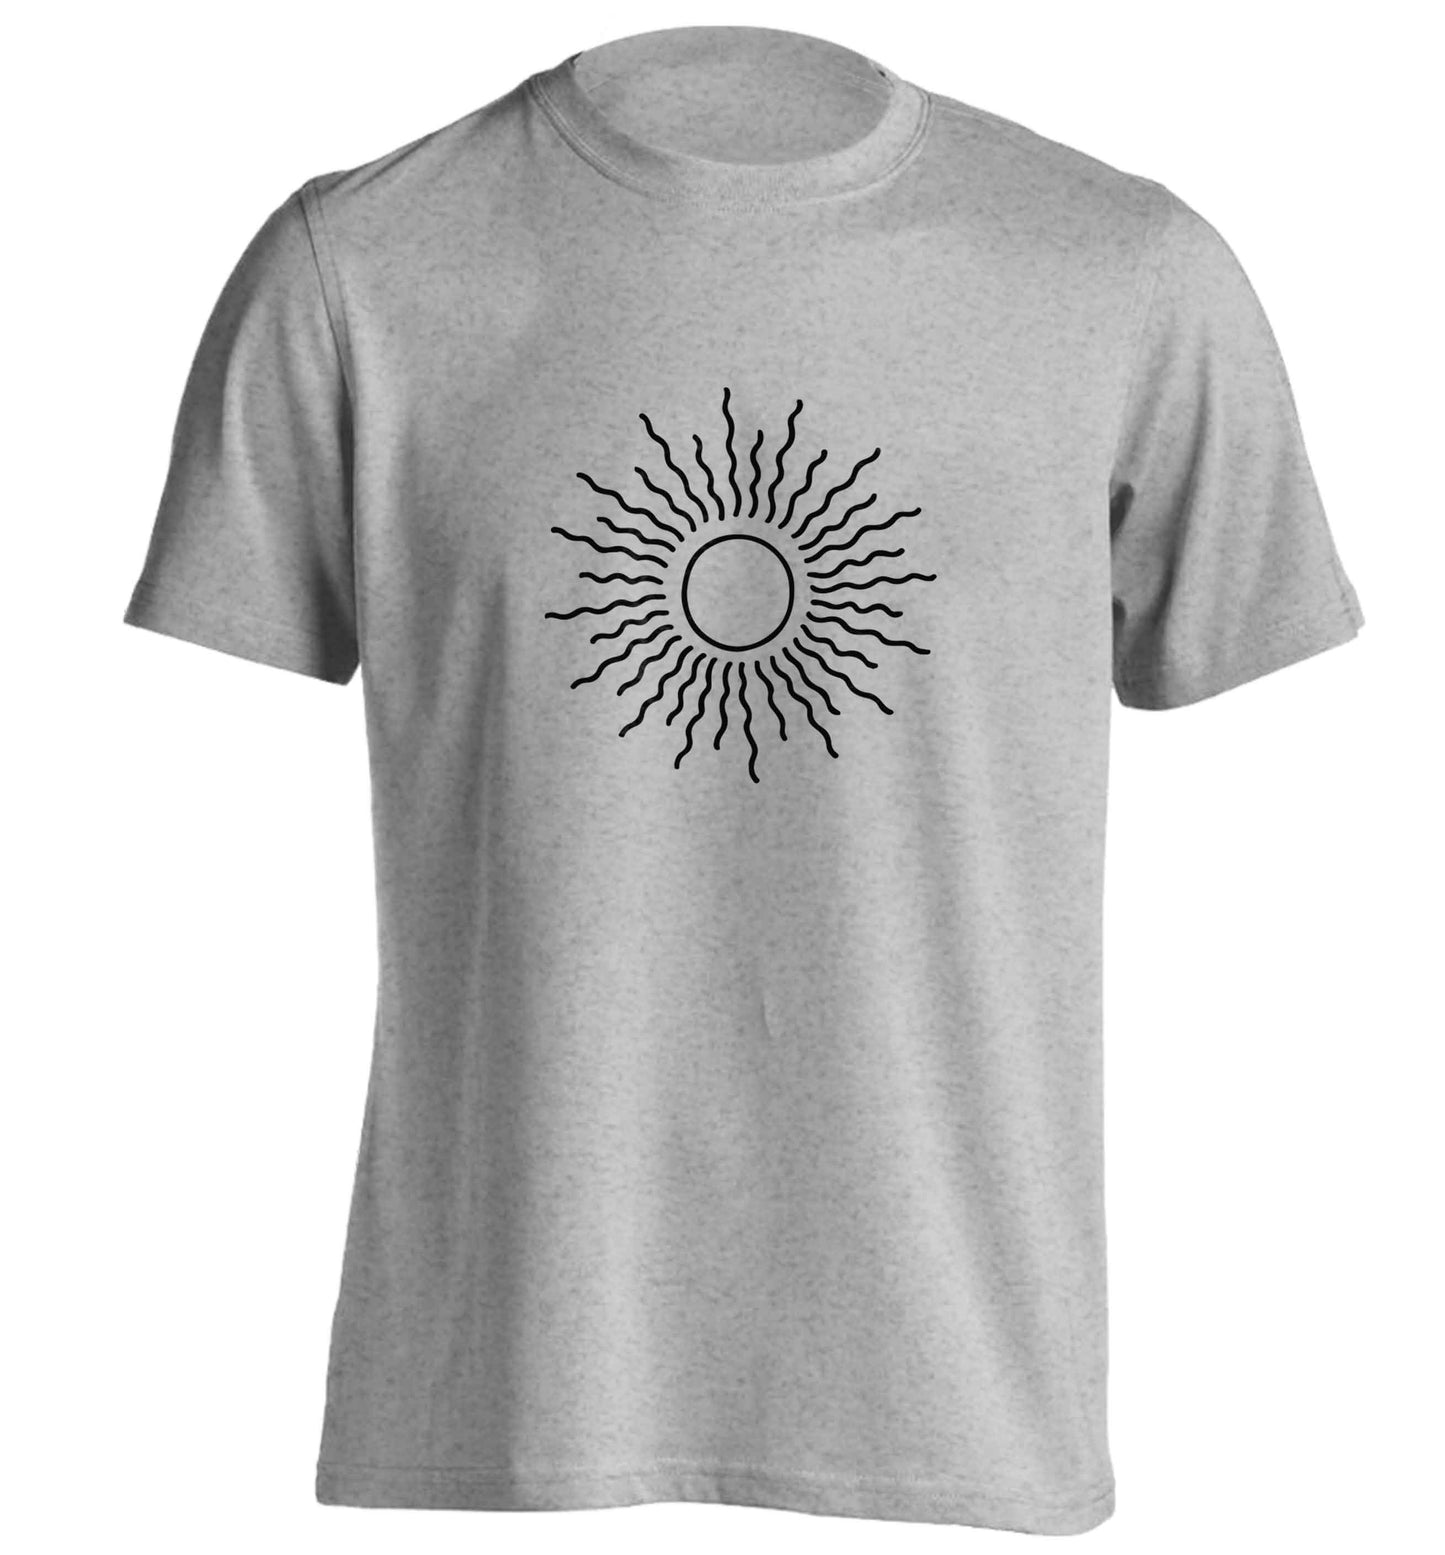 Sun illustration adults unisex grey Tshirt 2XL